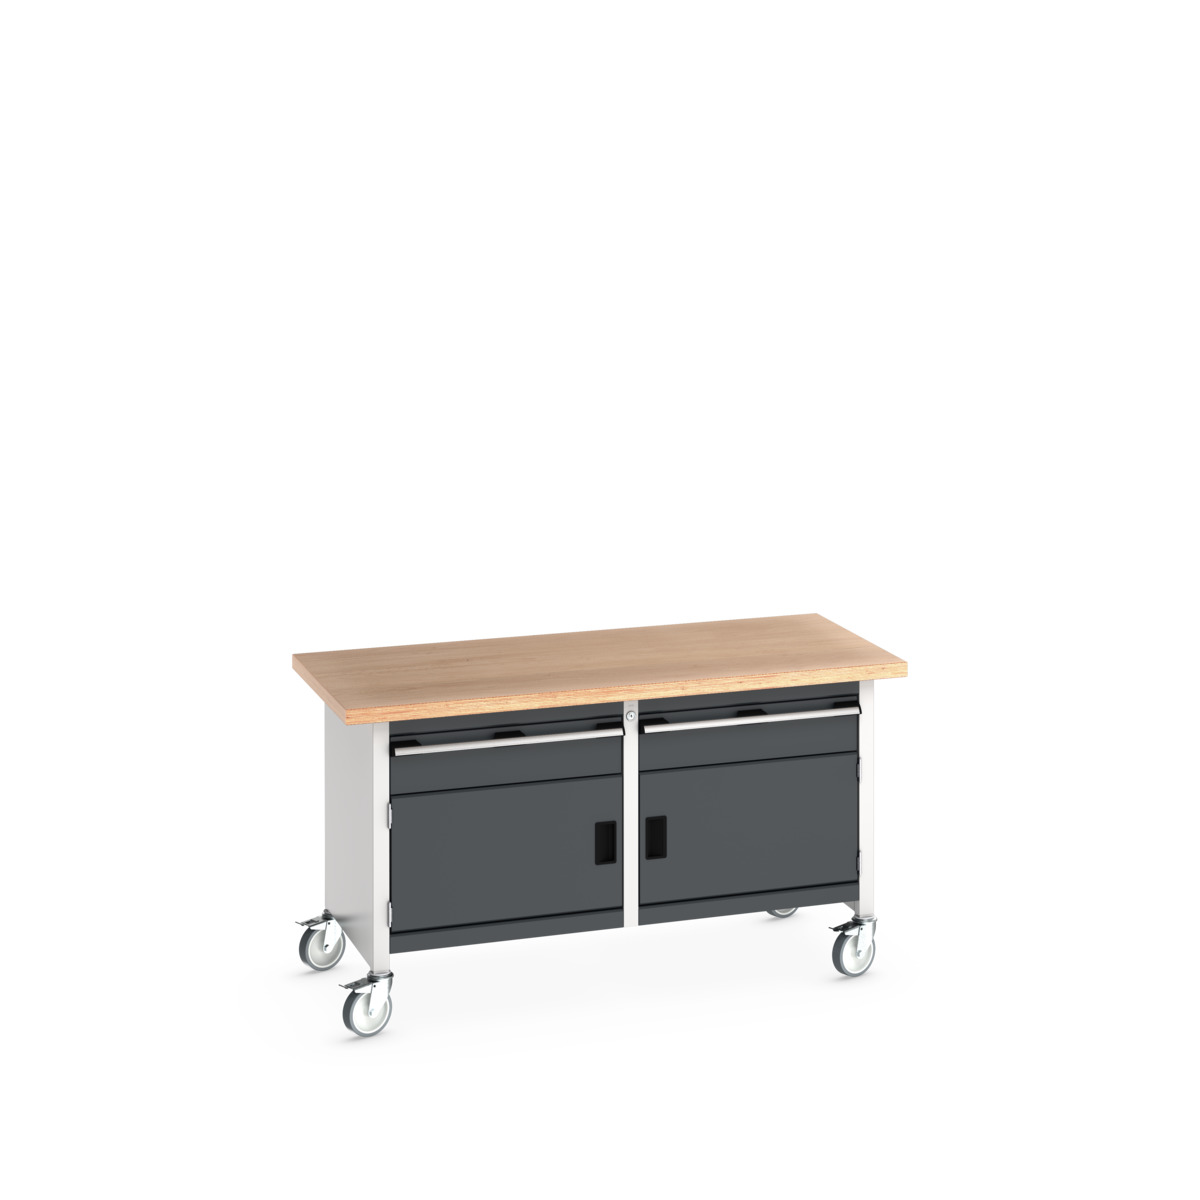 41002103. - cubio mobile storage bench (mpx)